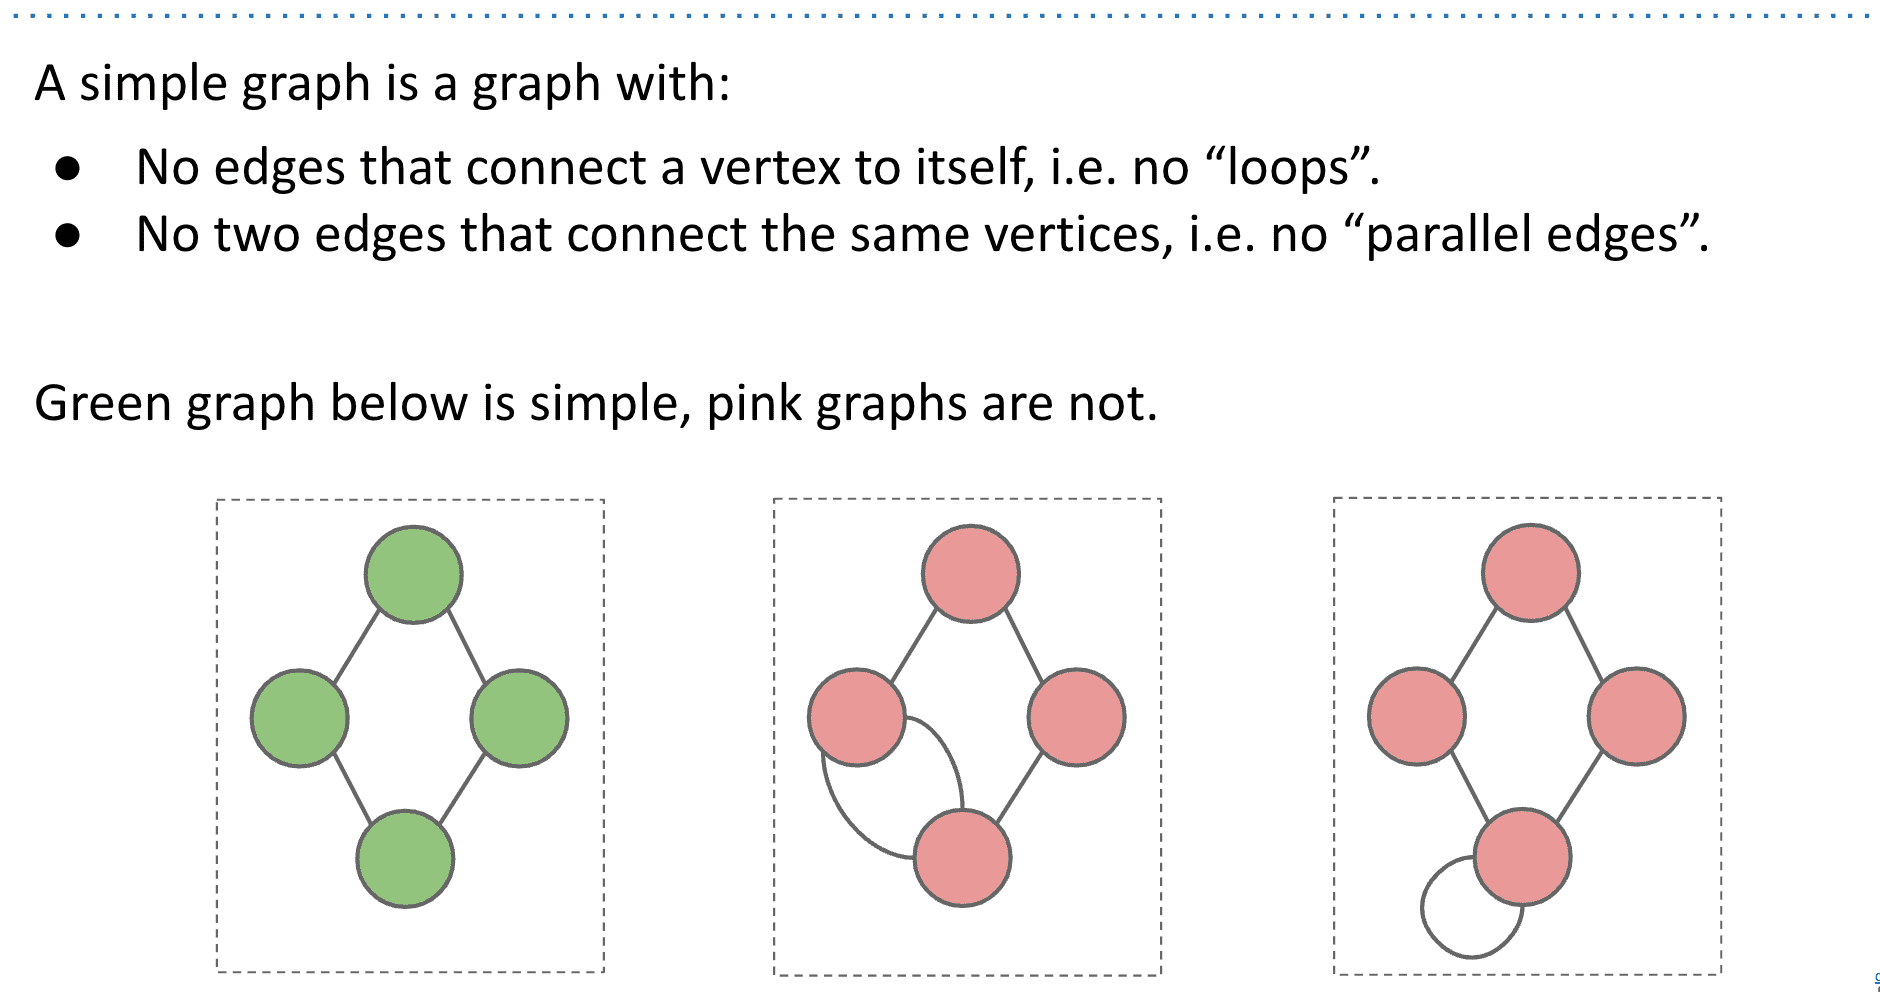 绿色的也称为简单图simple graph,本课里的graph都是simple graph